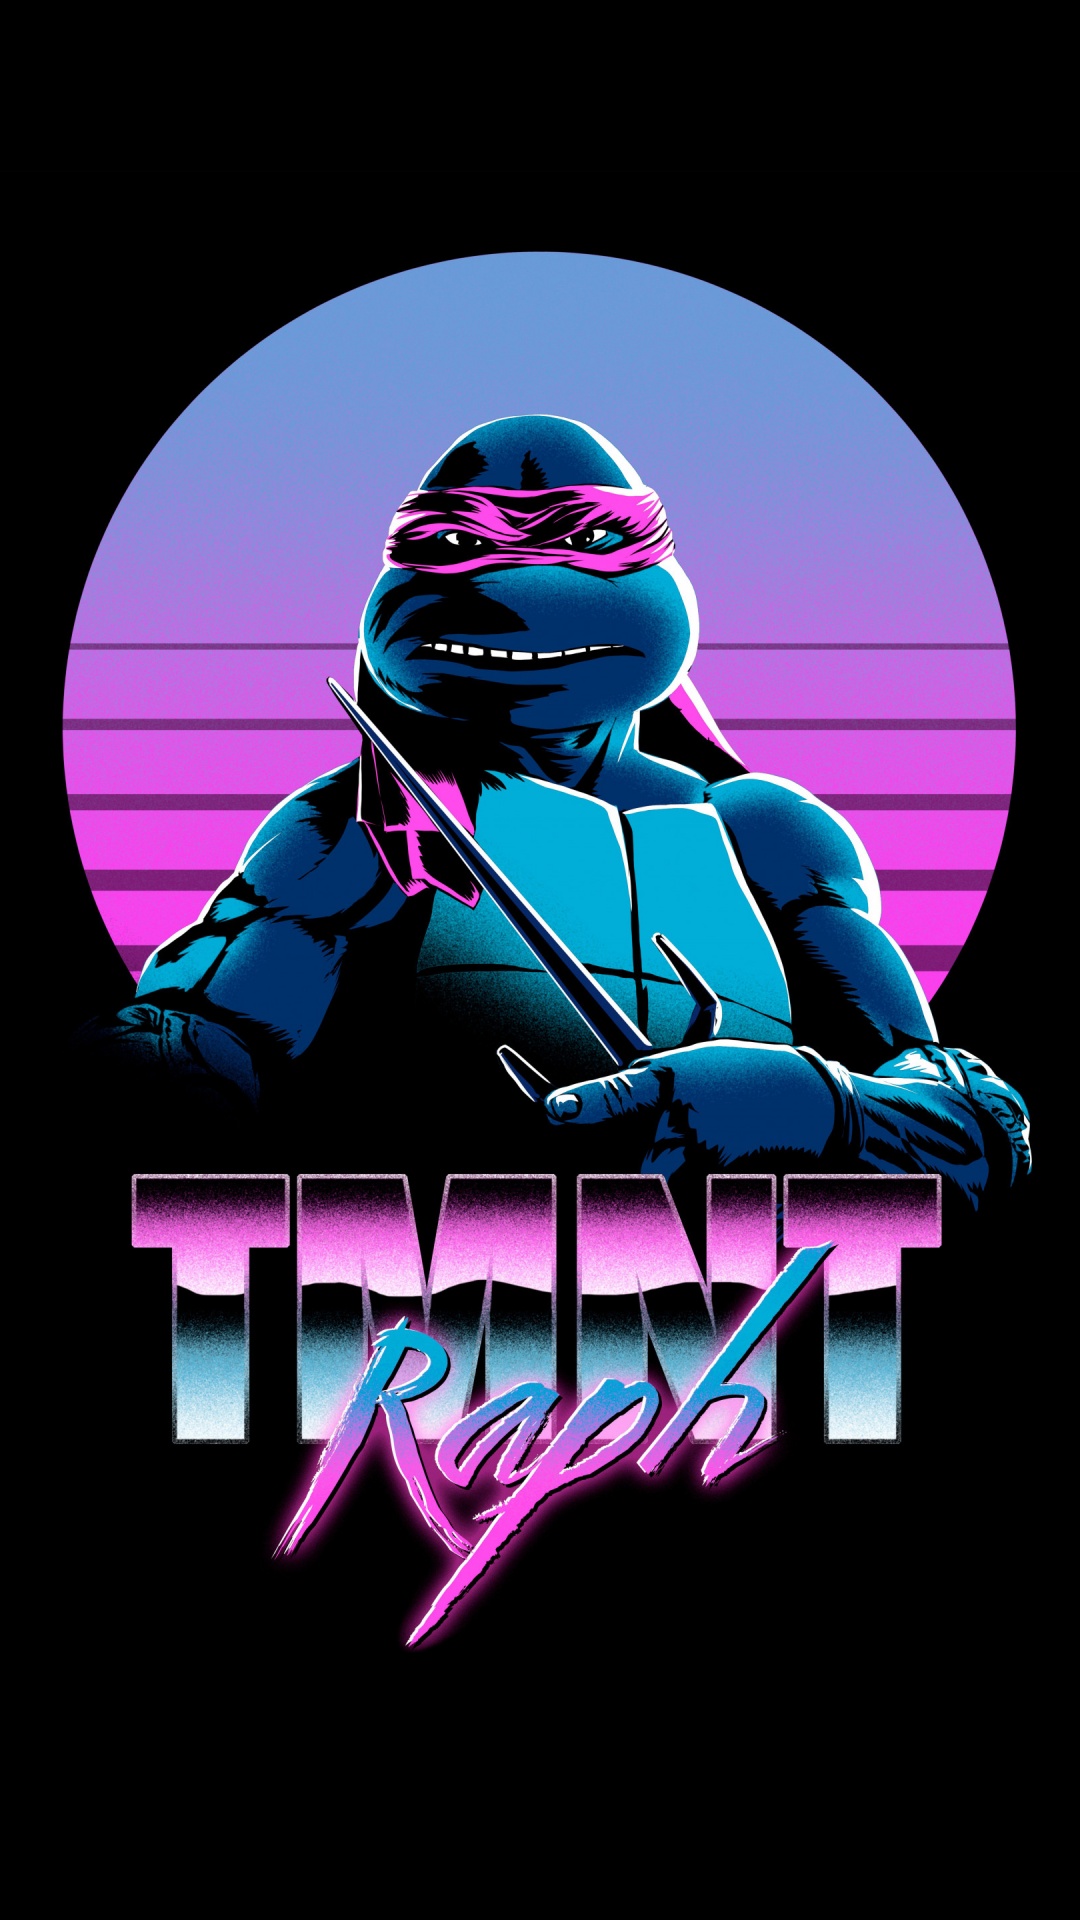 https://4kwallpapers.com/images/wallpapers/raphael-tmnt-teenage-mutant-ninja-turtles-amoled-neon-black-1080x1920-5033.jpg